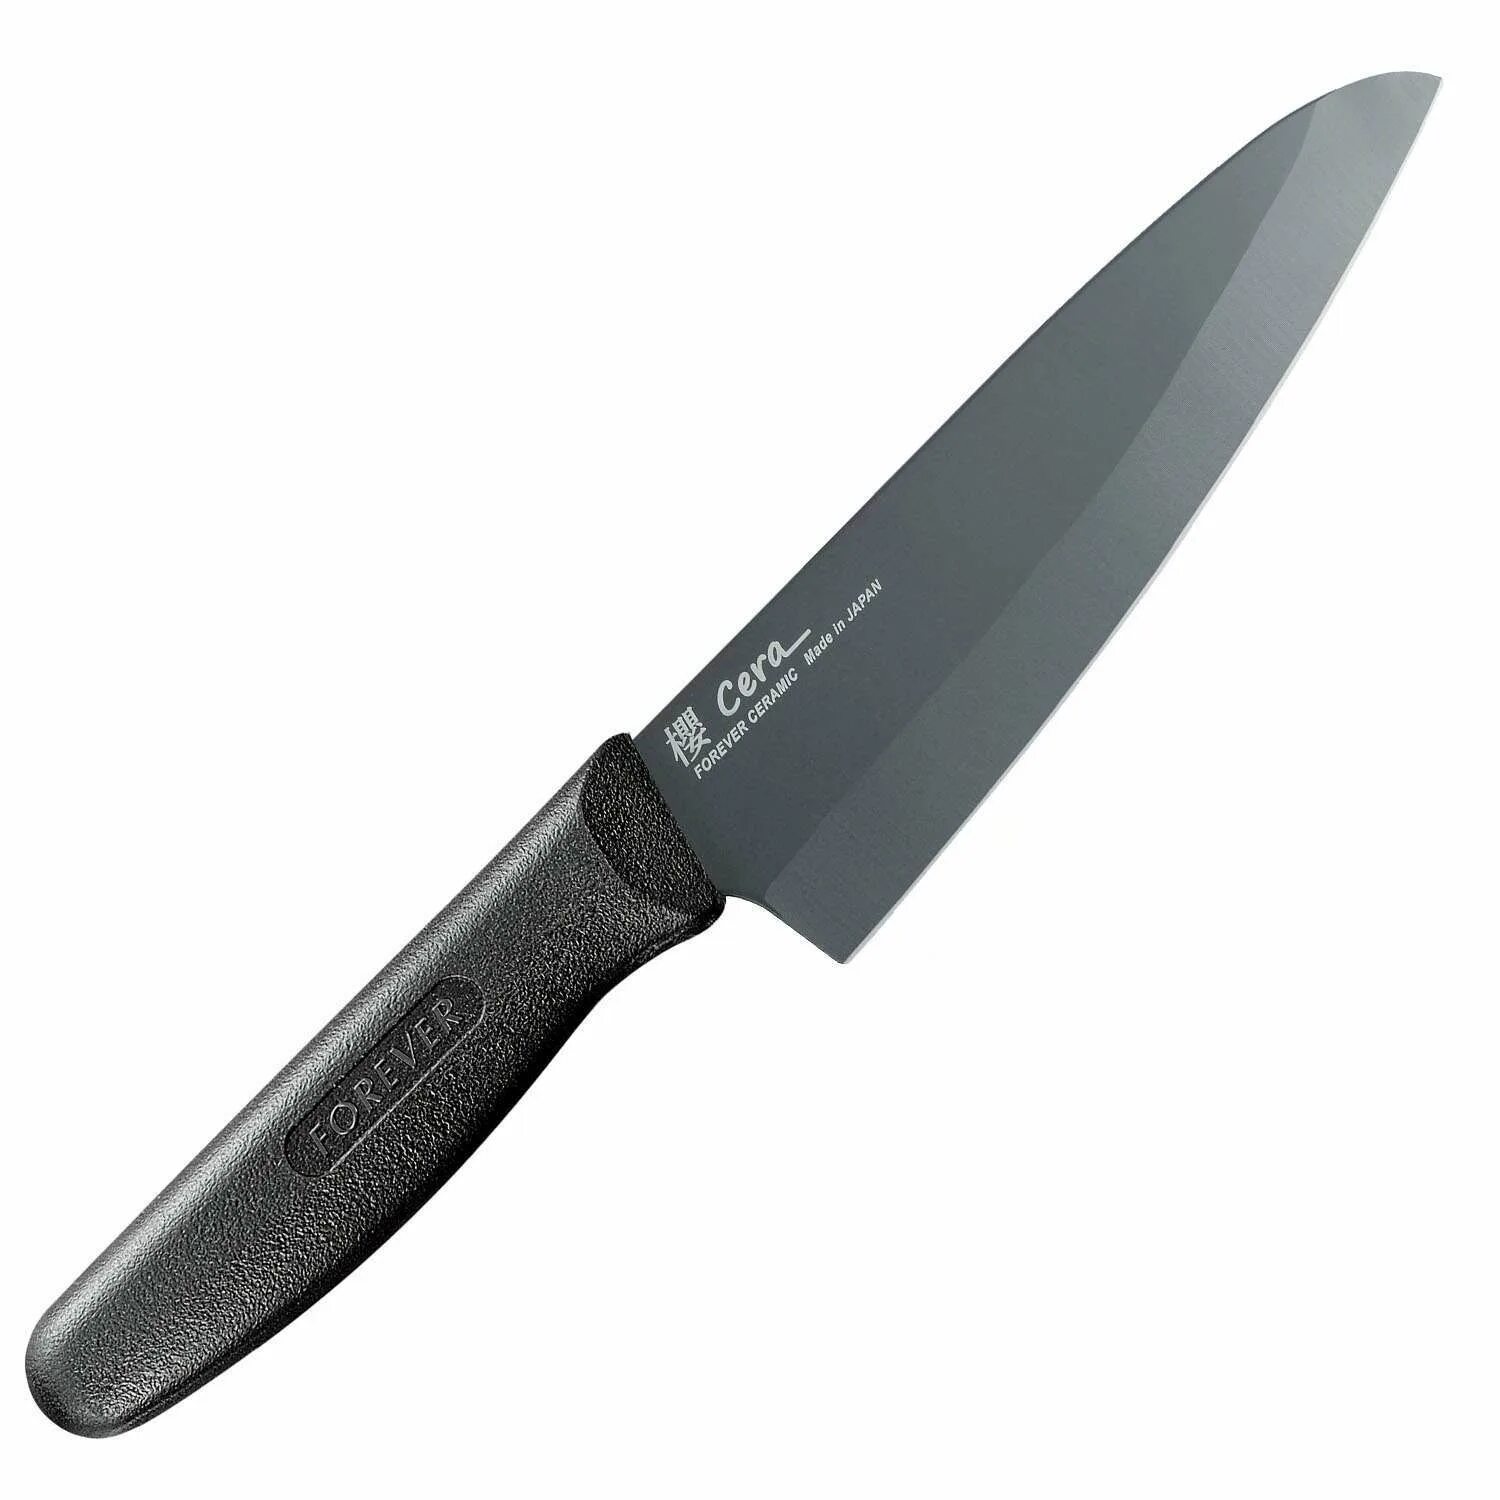 Нож керамический TUOTOWN Black. Нож Sakura. Кухонный японский нож Сакура. Керамические ножи Forever.